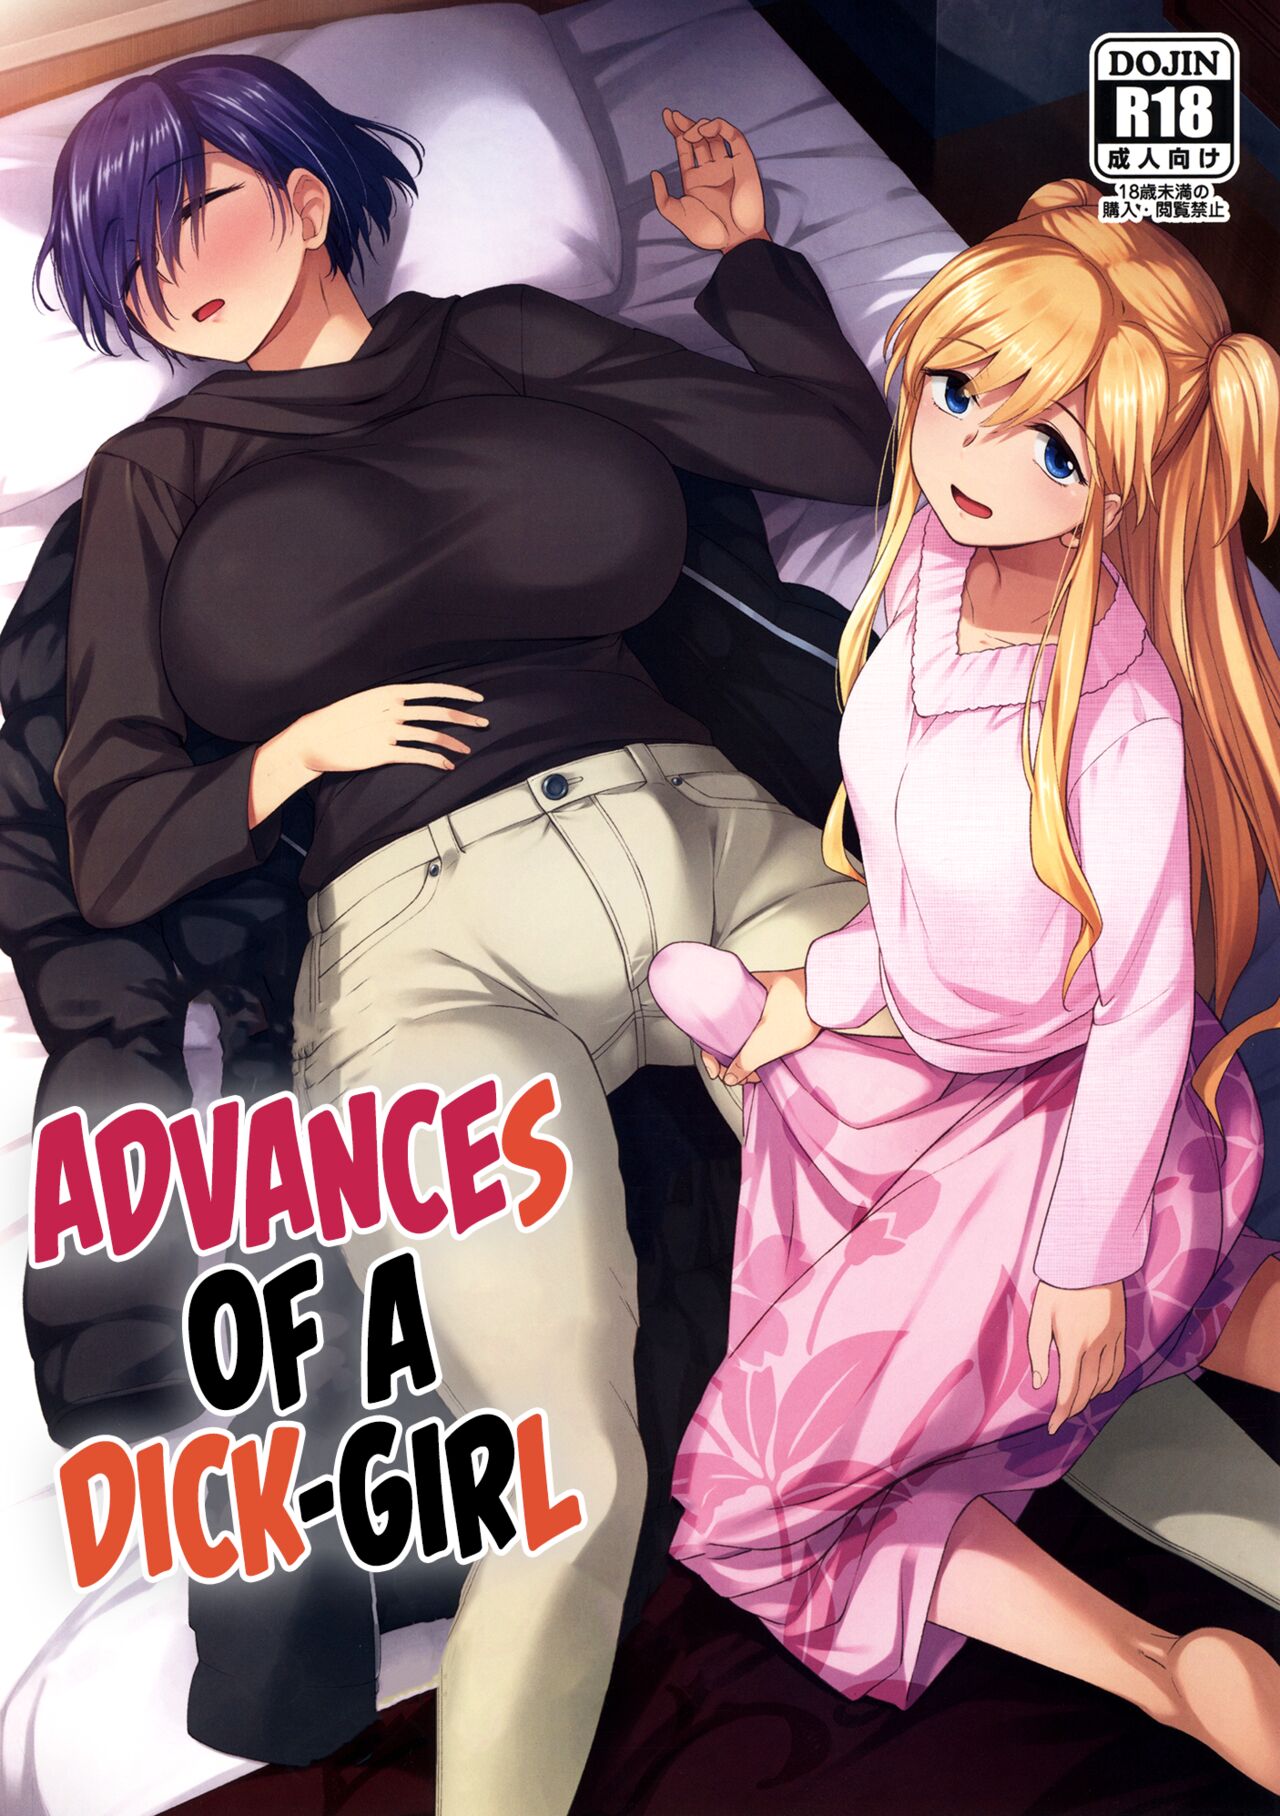 Anime dick girl